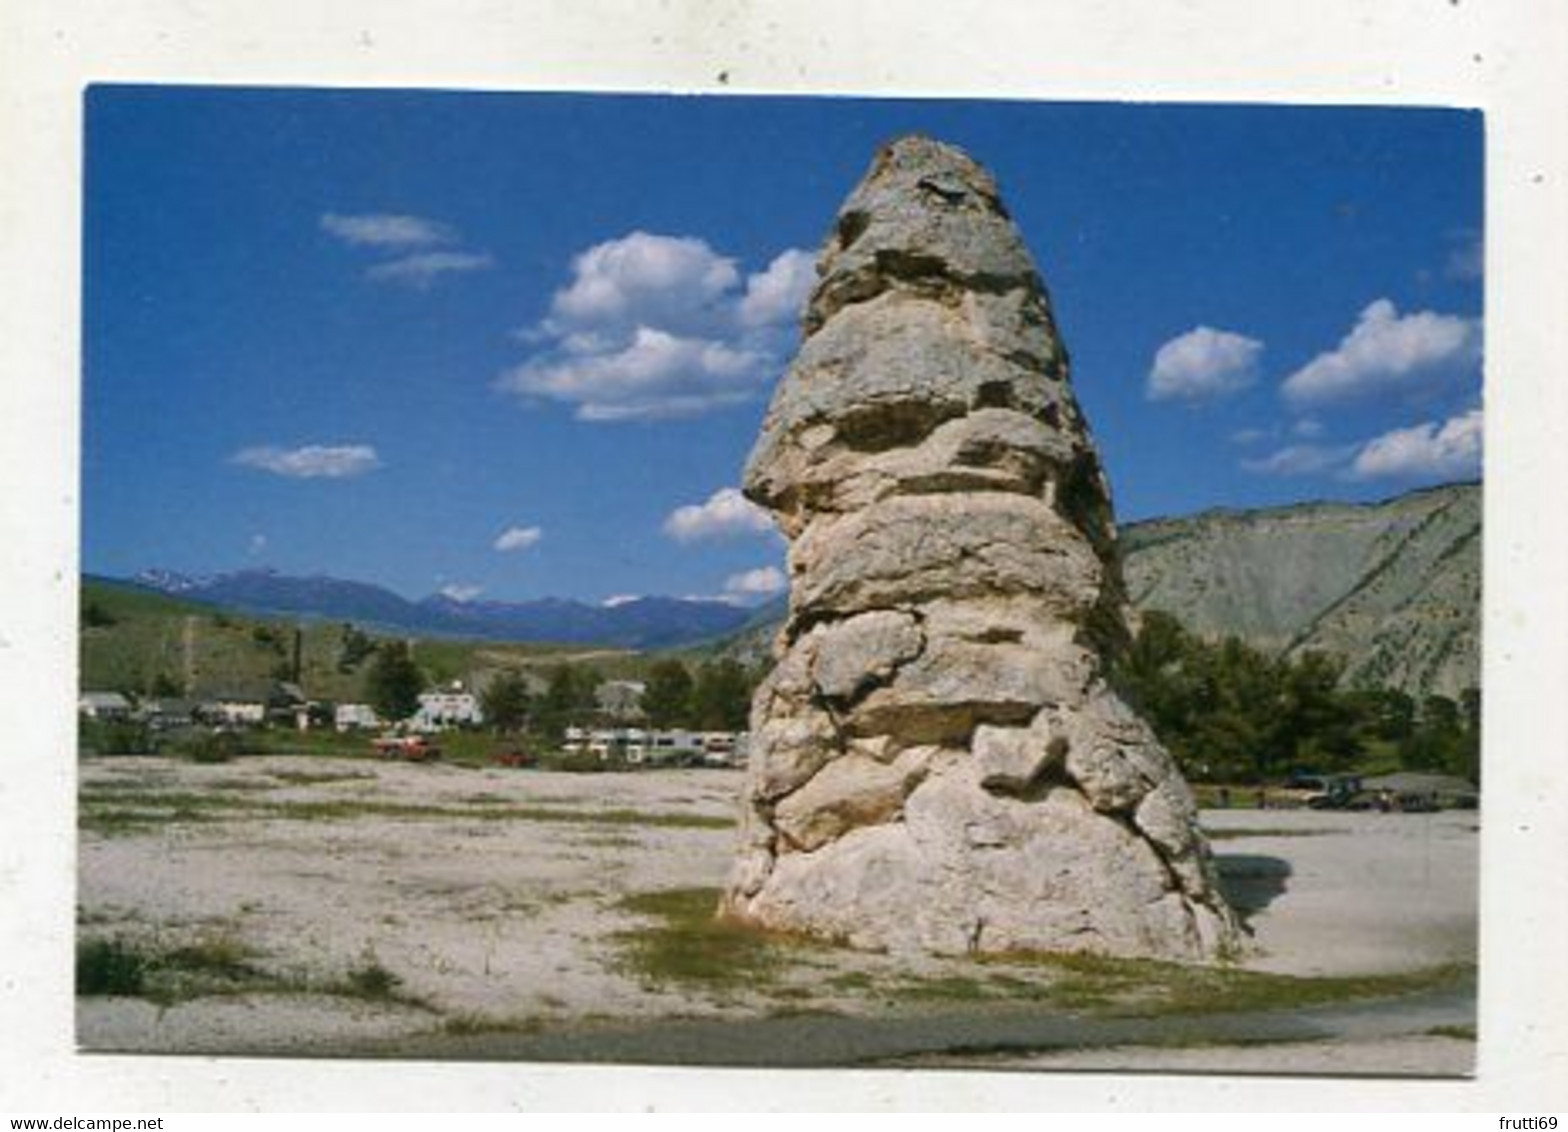 AK 055911 USA - Wyoming - Yellowstone National Park - Mammoth Hot Springs - Liberty Cap - Yellowstone